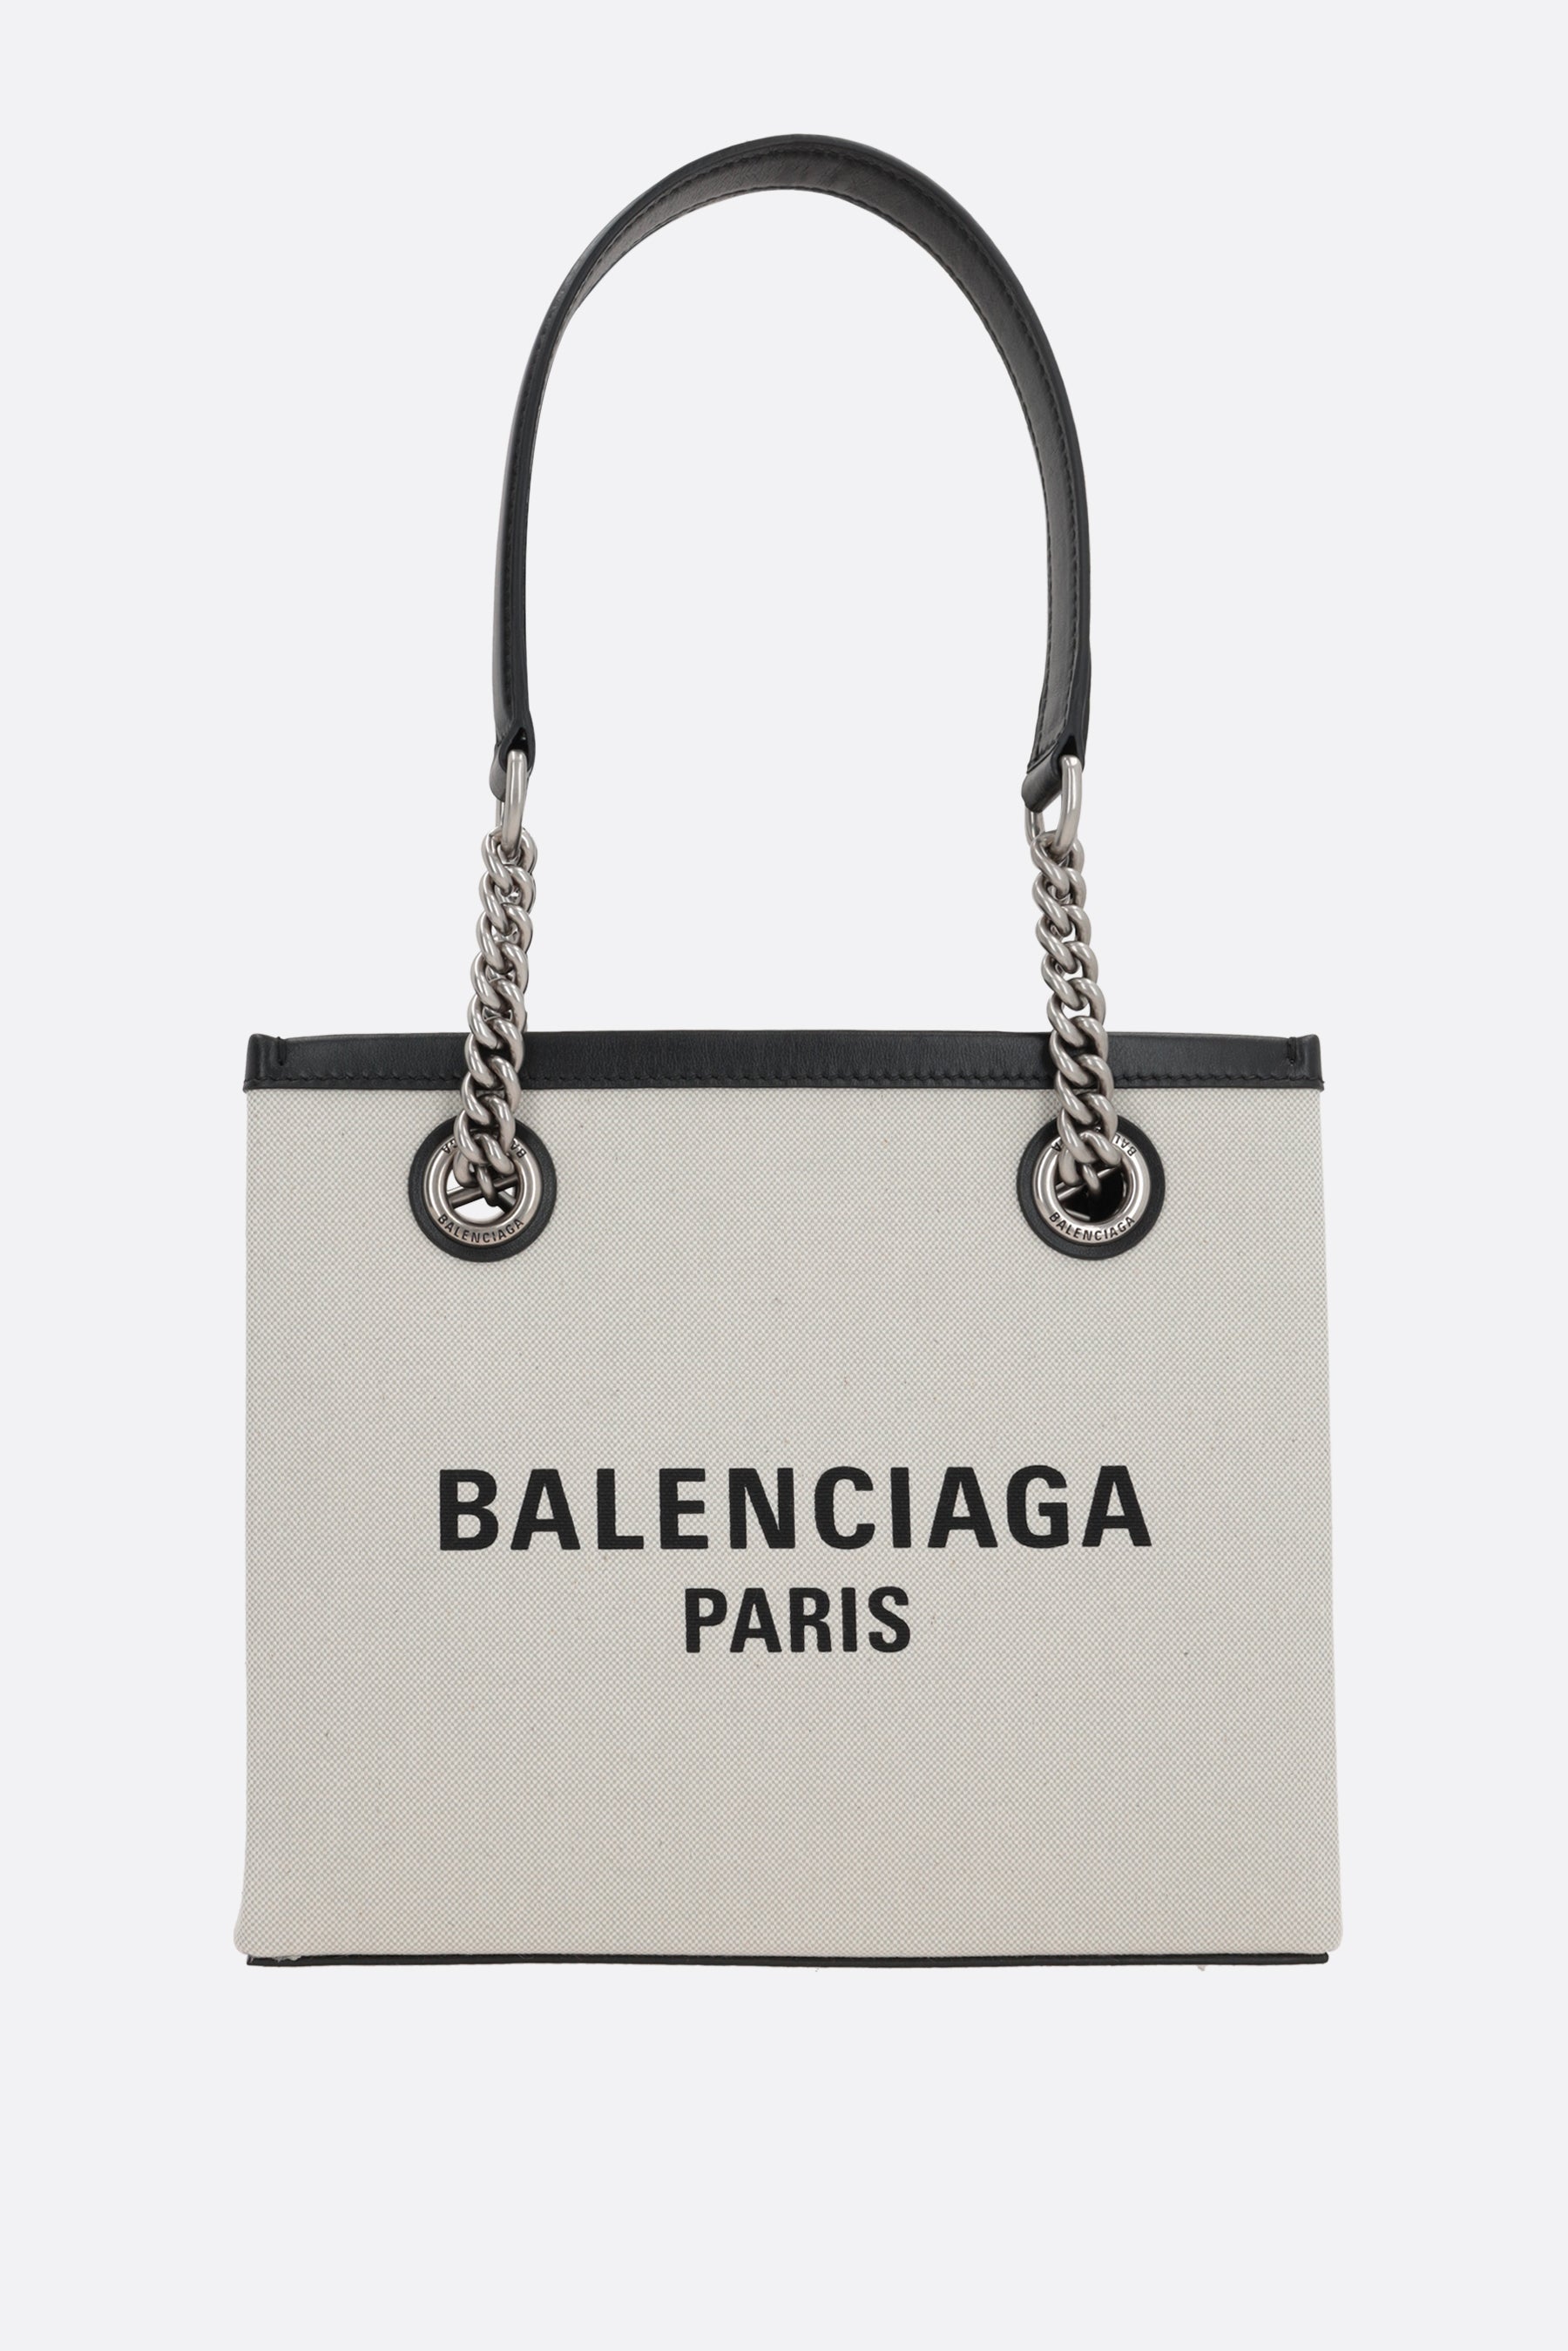 Balenciaga Ville xxs ( What fits inside/ Bag swap ) 